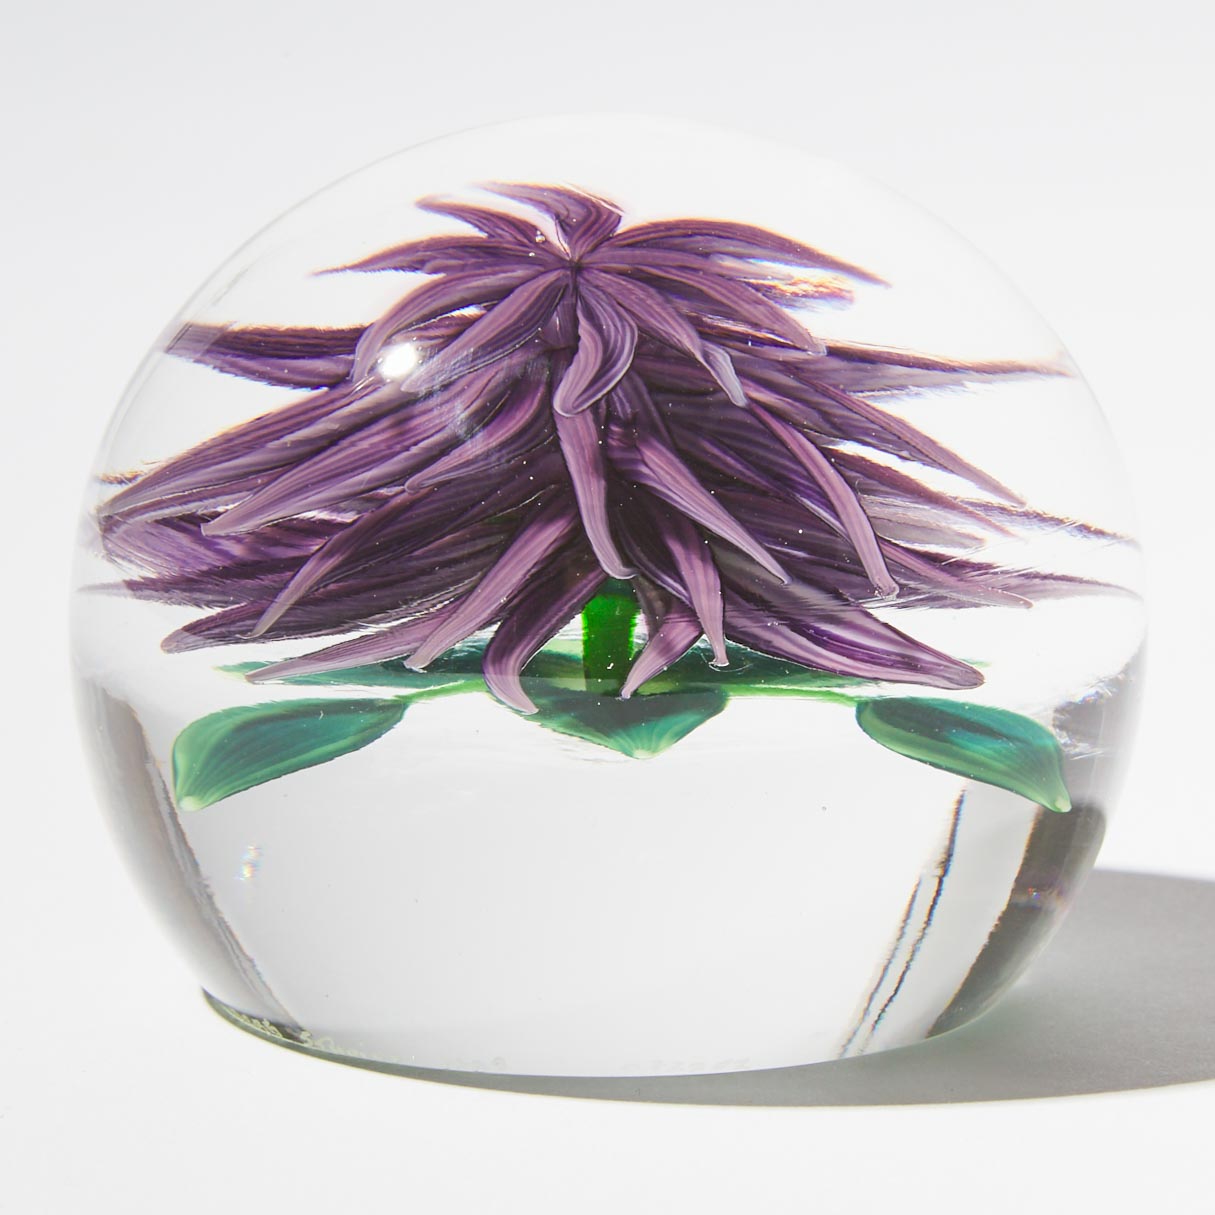 Steven Lundberg (American, 1953-2008), Violet Chrysanthemum Glass Paperweight, 1988